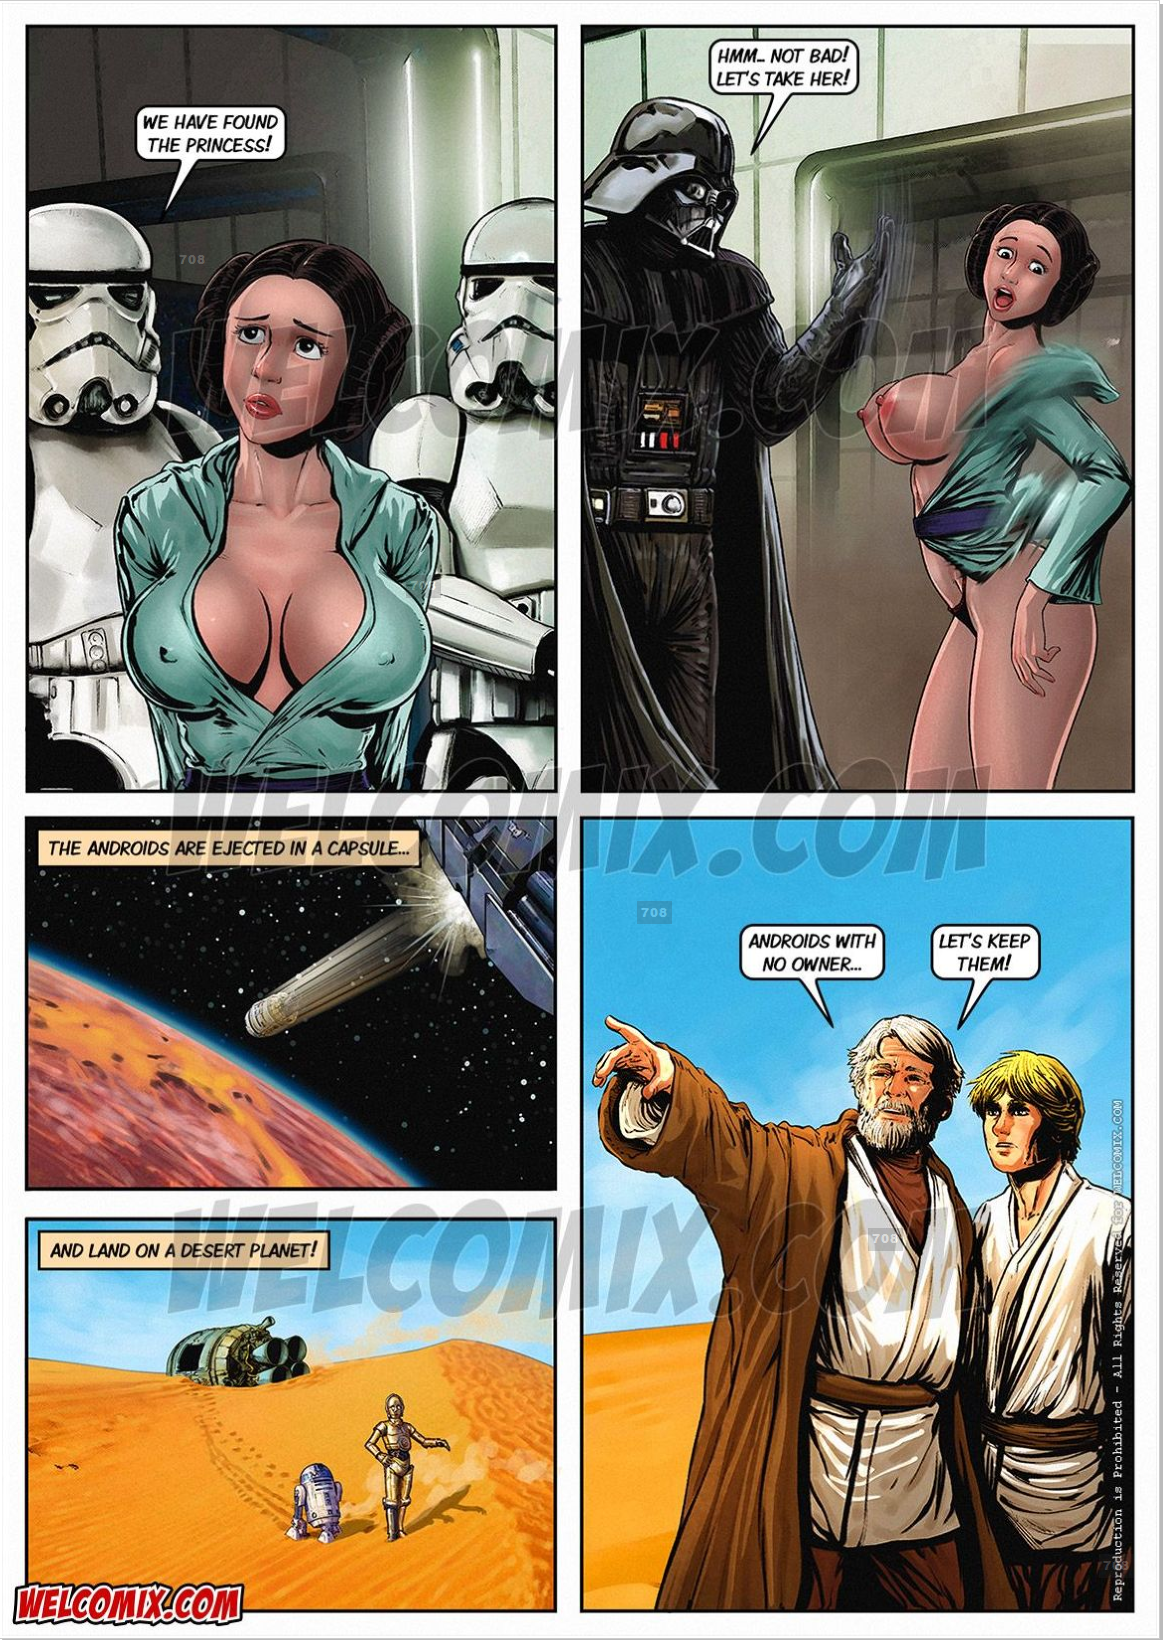 BlockBuster-Comics-03-Star-Wars-English-page04--Gotofap.tk--33770277.png